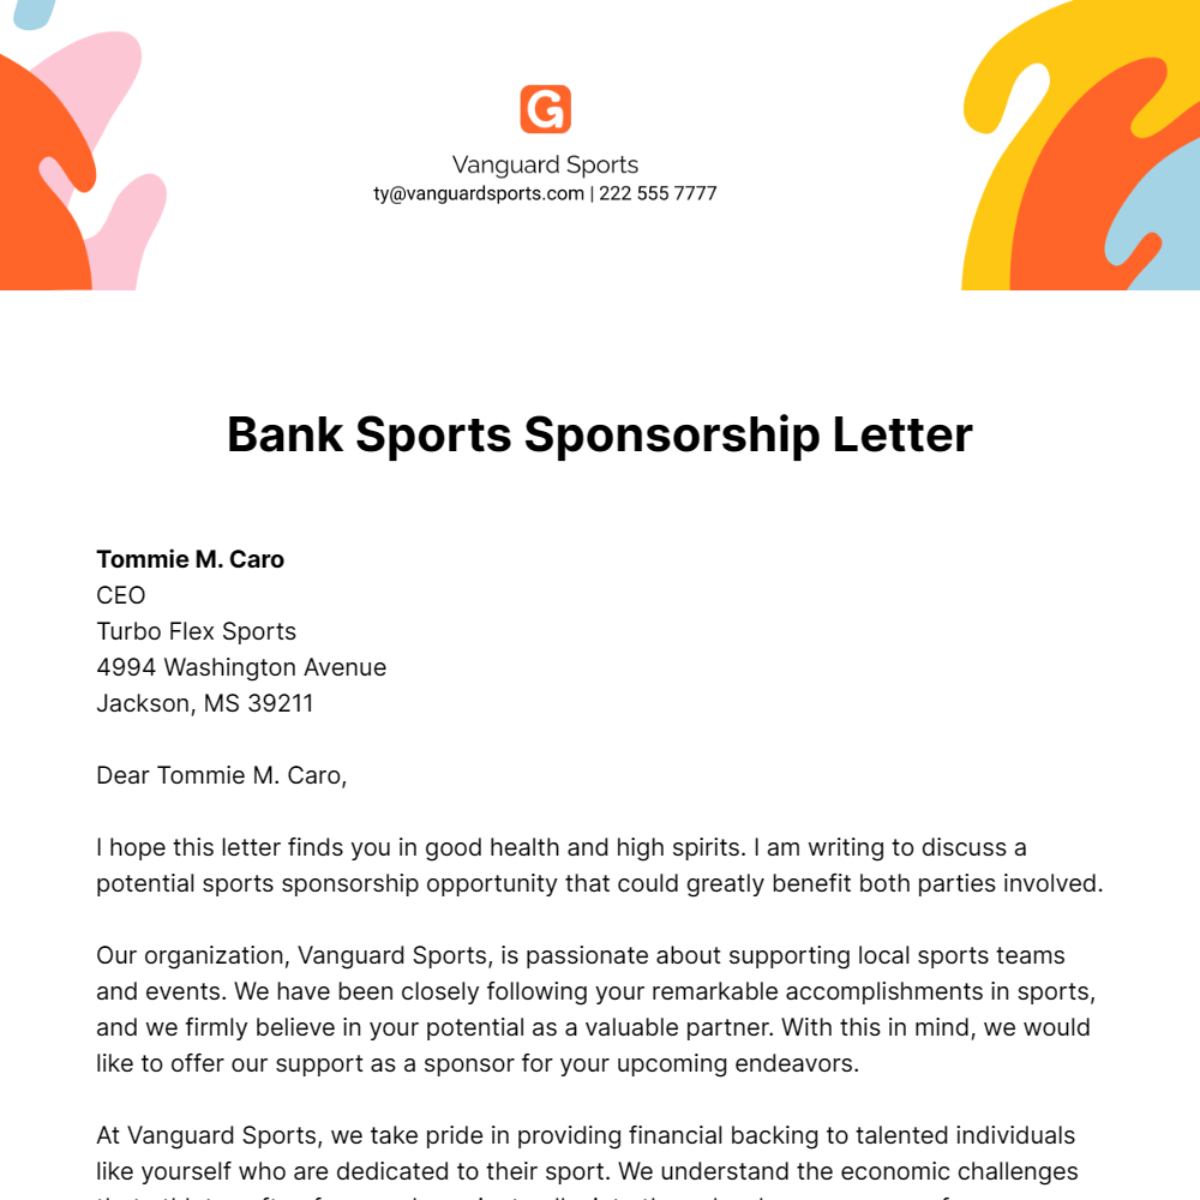 Bank Sports Sponsorship Letter Template